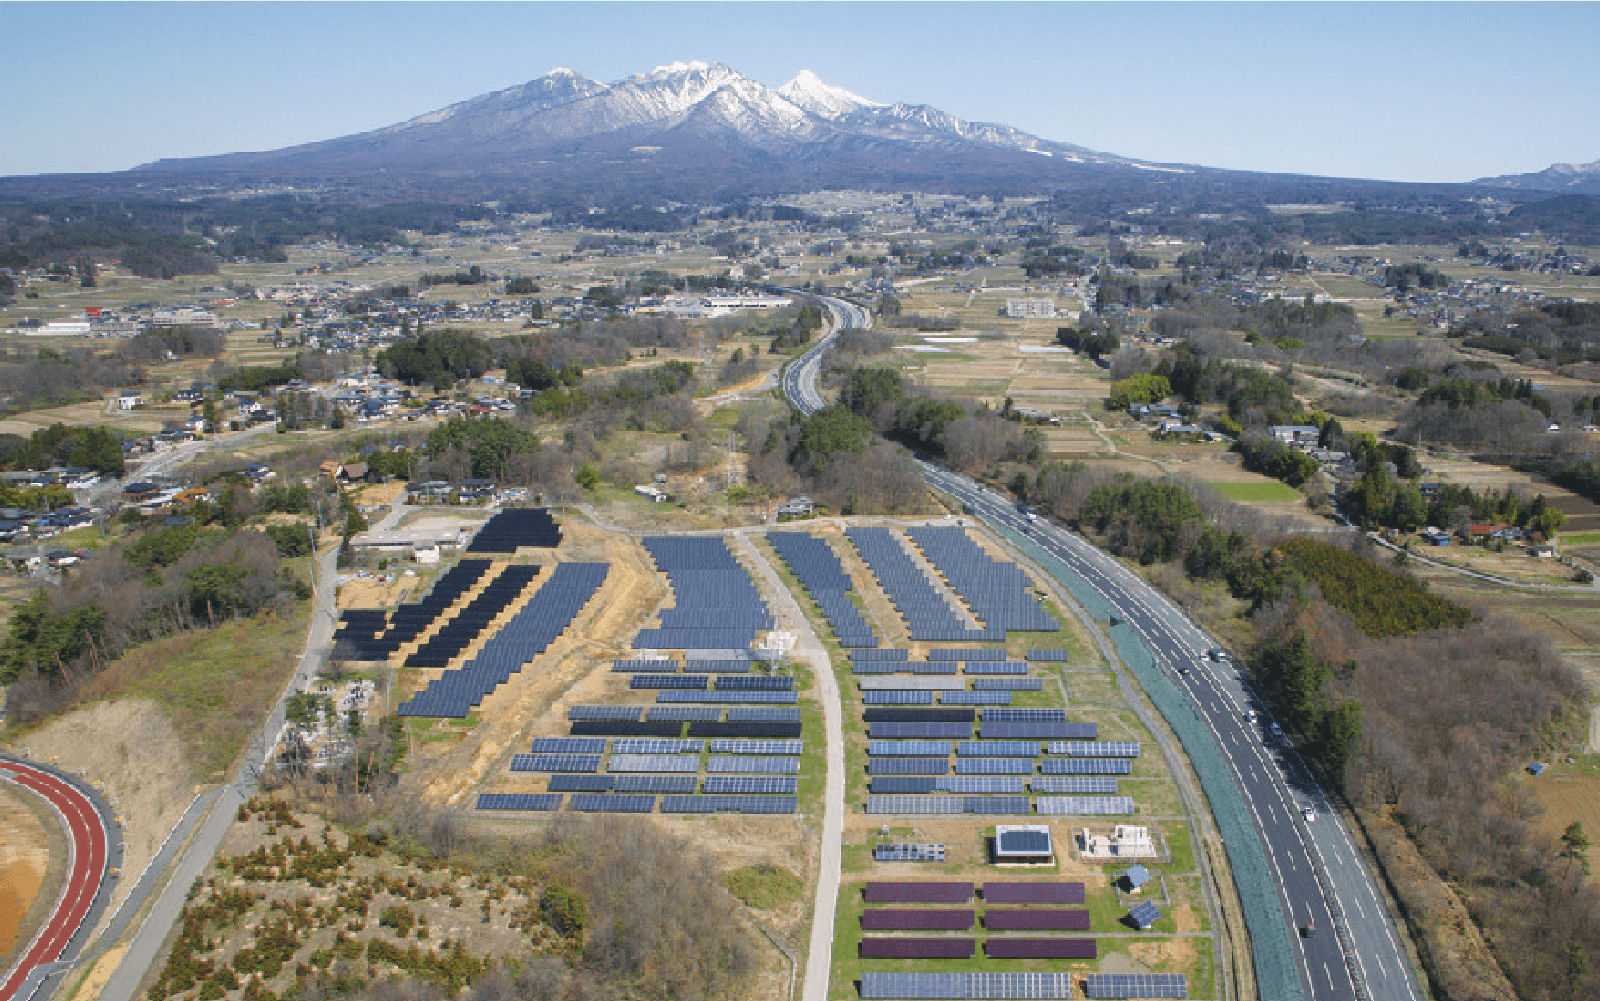 NTTグループと北杜市が共同で運用する大規模太陽光発電実証研究システム。大規模太陽光発電の将来を左右する重要な国家プロジェクトに位置づけられた